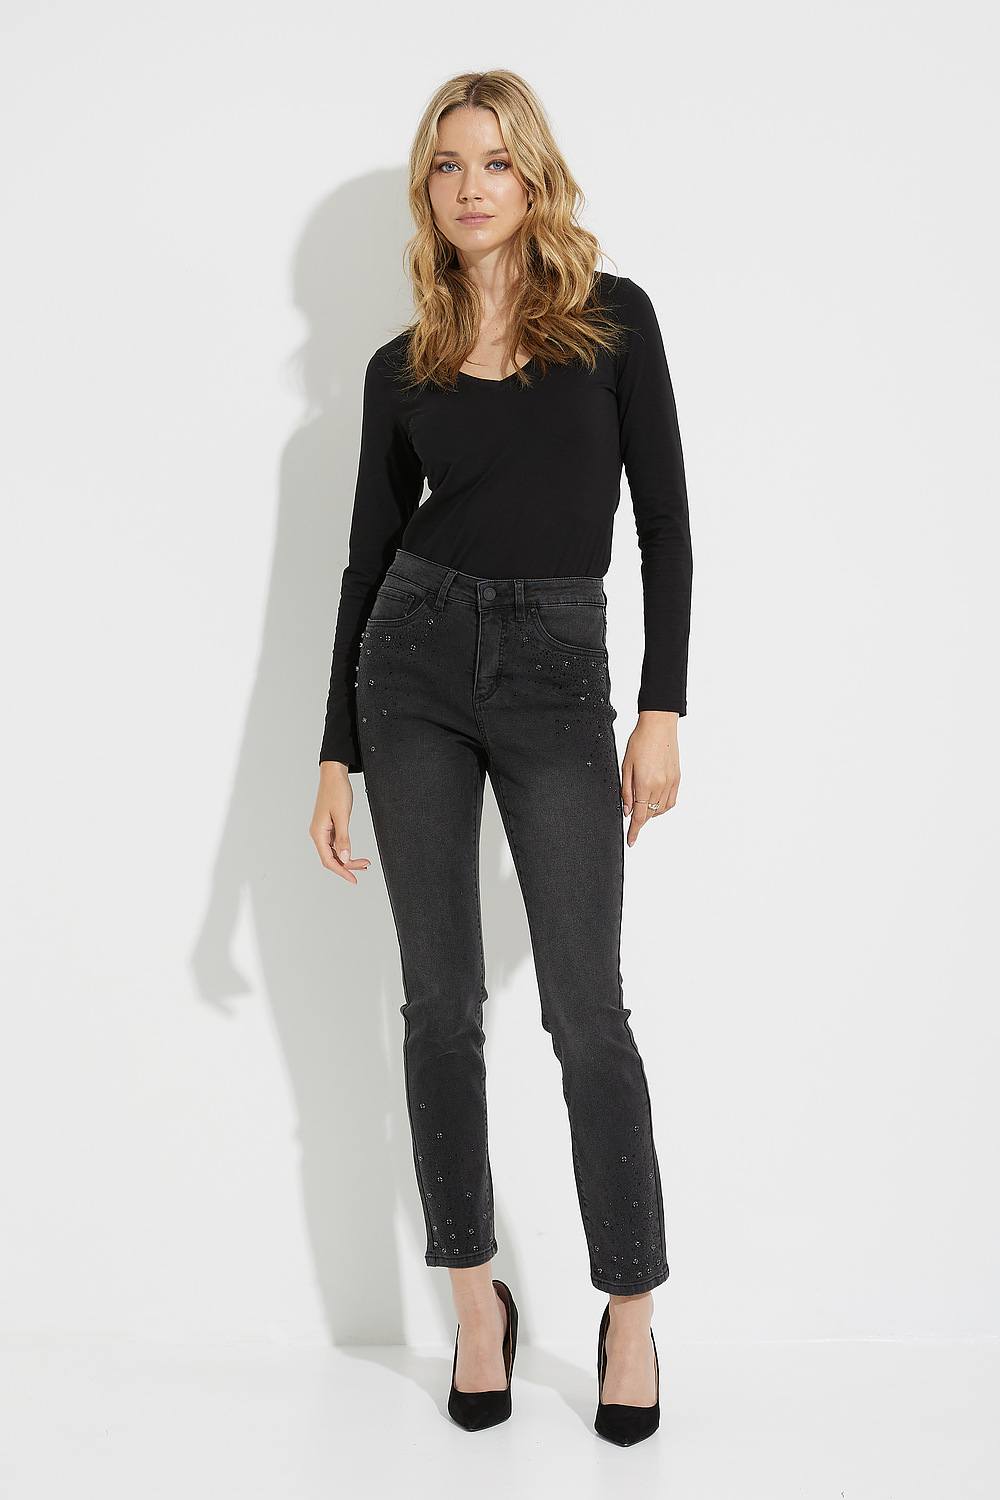 Joseph Ribkoff Studded Jeans Style 223925. Charcoal Grey